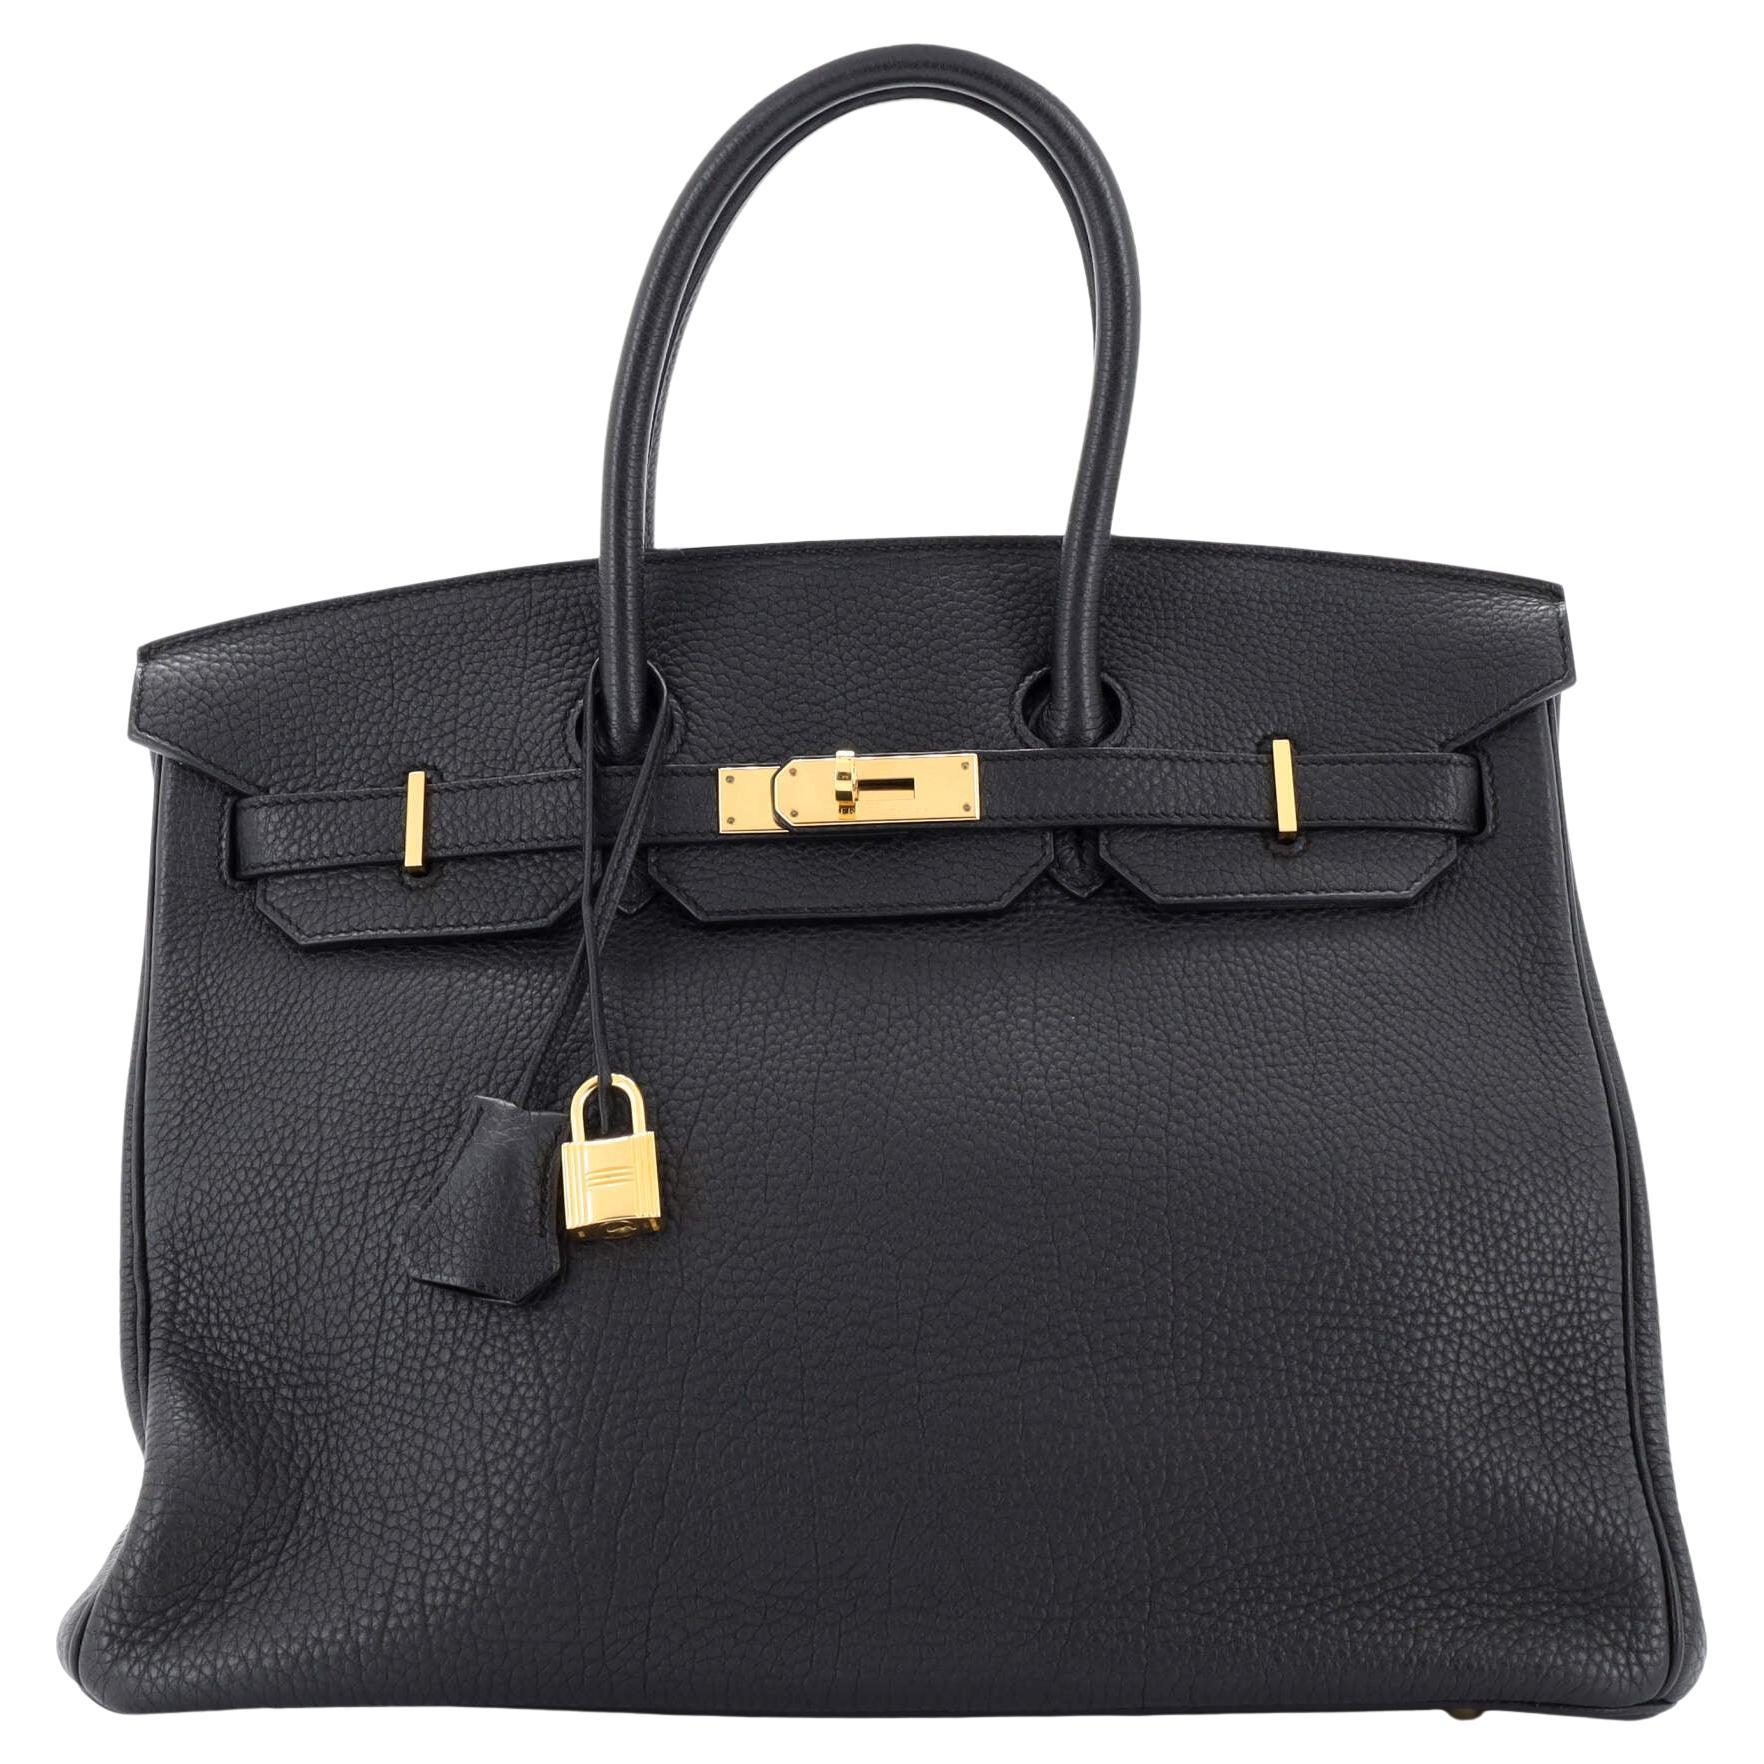 Hermes Birkin Handbag Noir Fjord with Gold Hardware 35